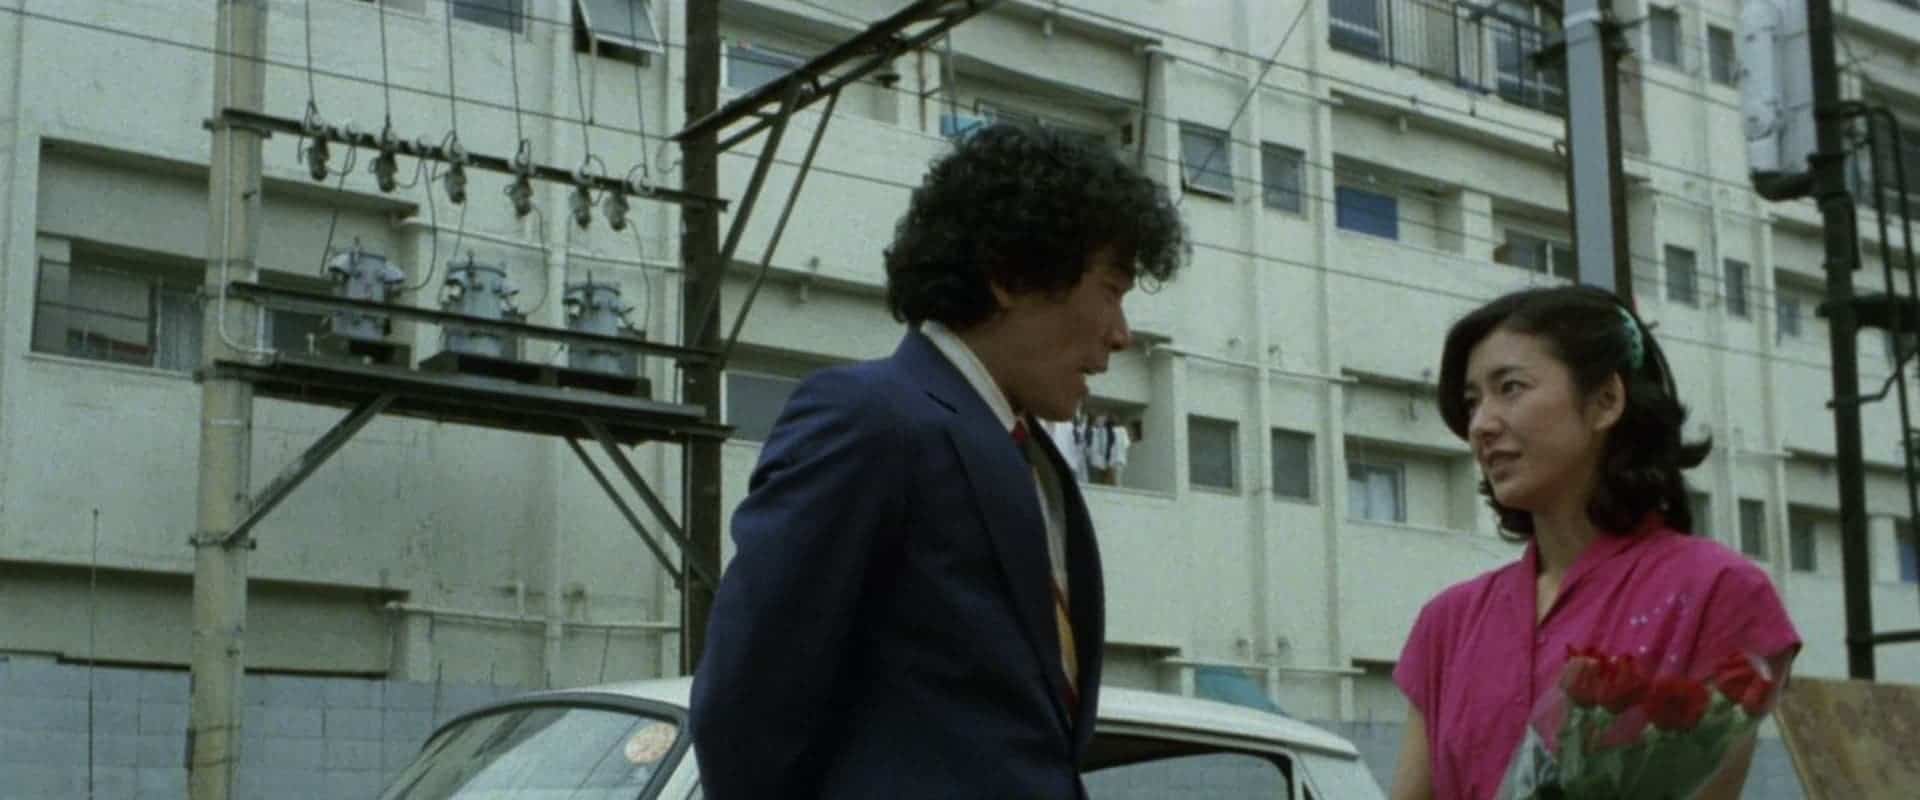 Antagonist Fashion - Style Representation of Yakuza in Films